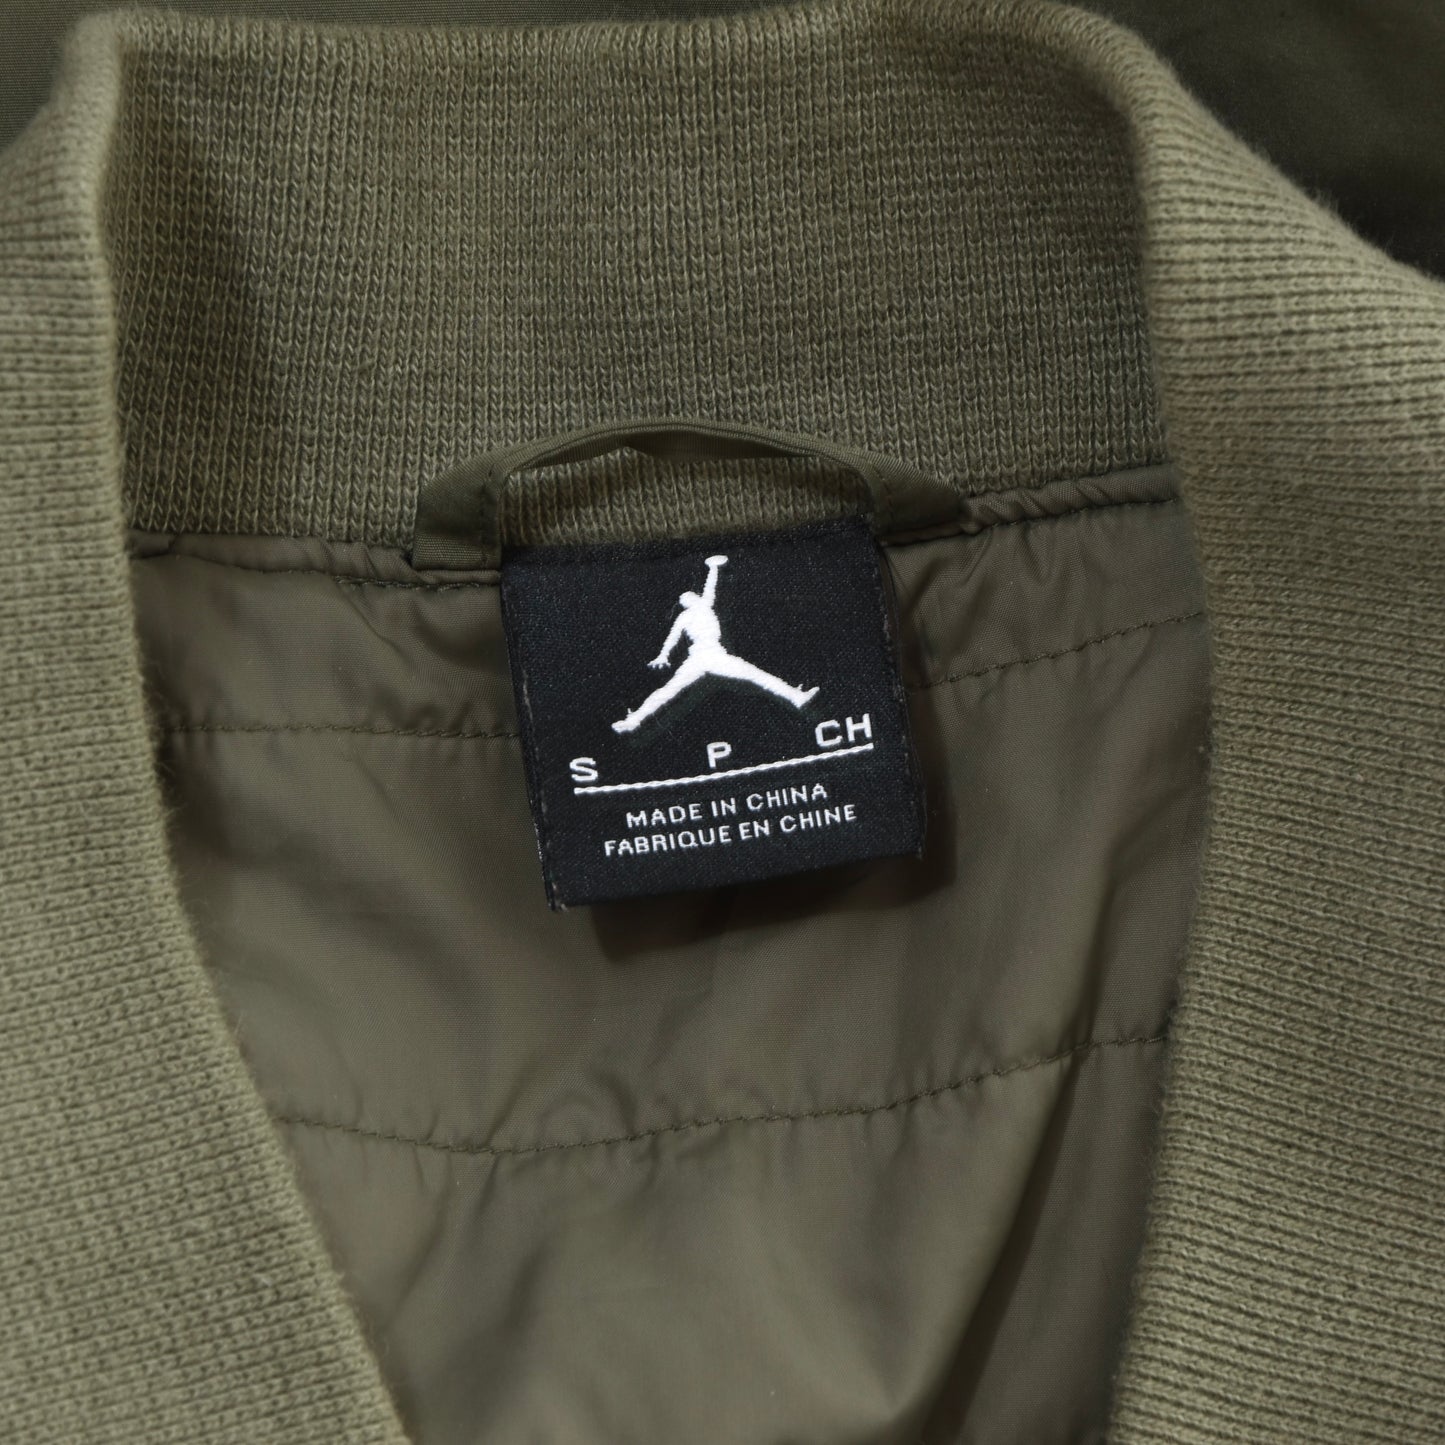 Air Jordan Long Jacket/Trench Size S - Green